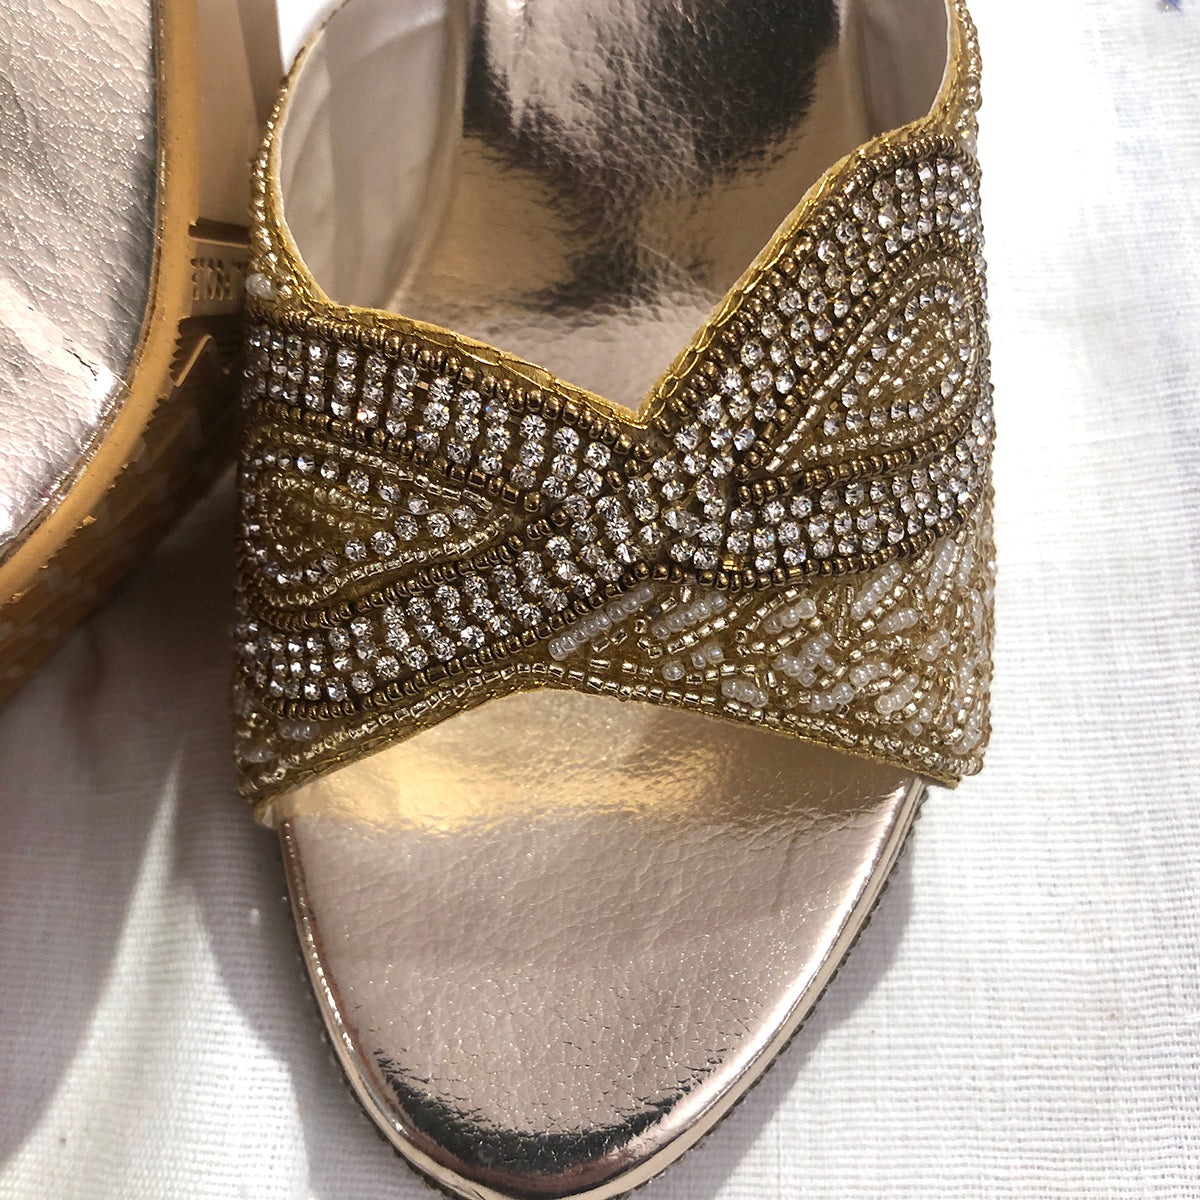 DT Gold Sandals3 - Vintage India NYC